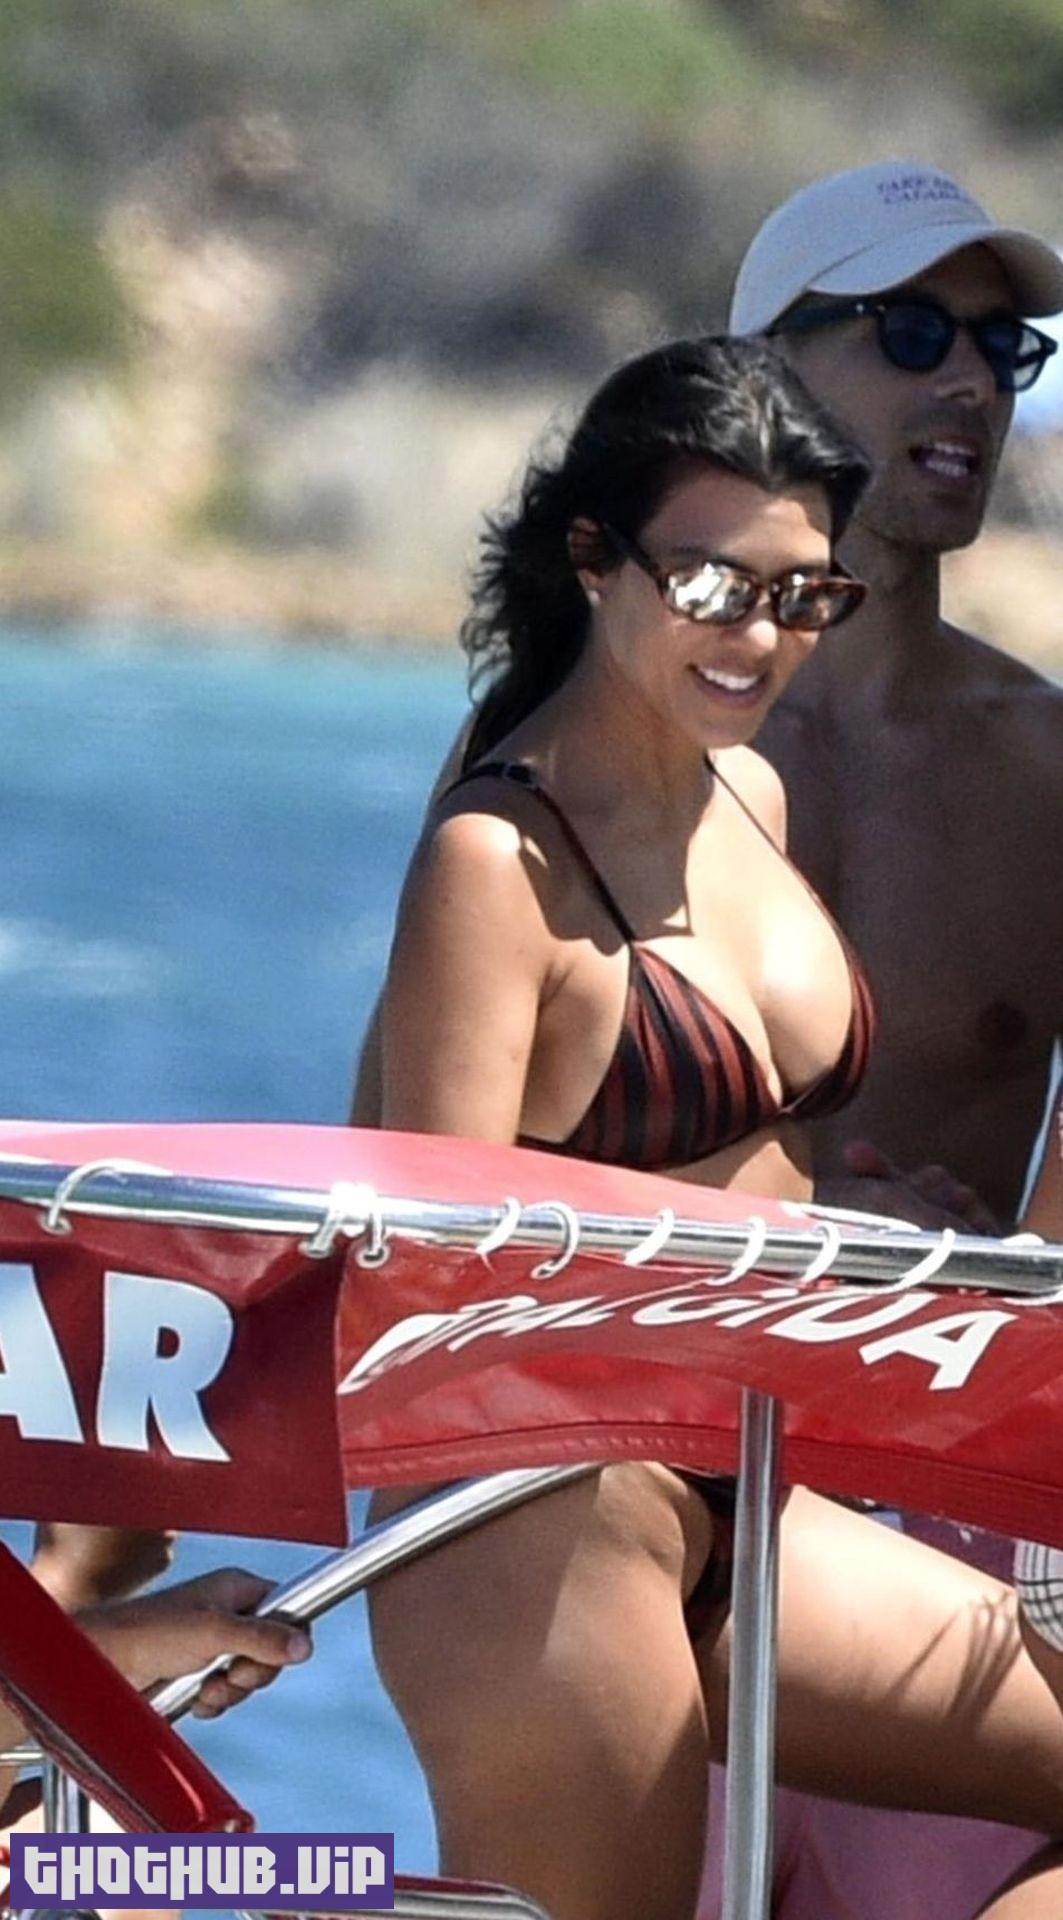 Kourtney Kardashian Tits